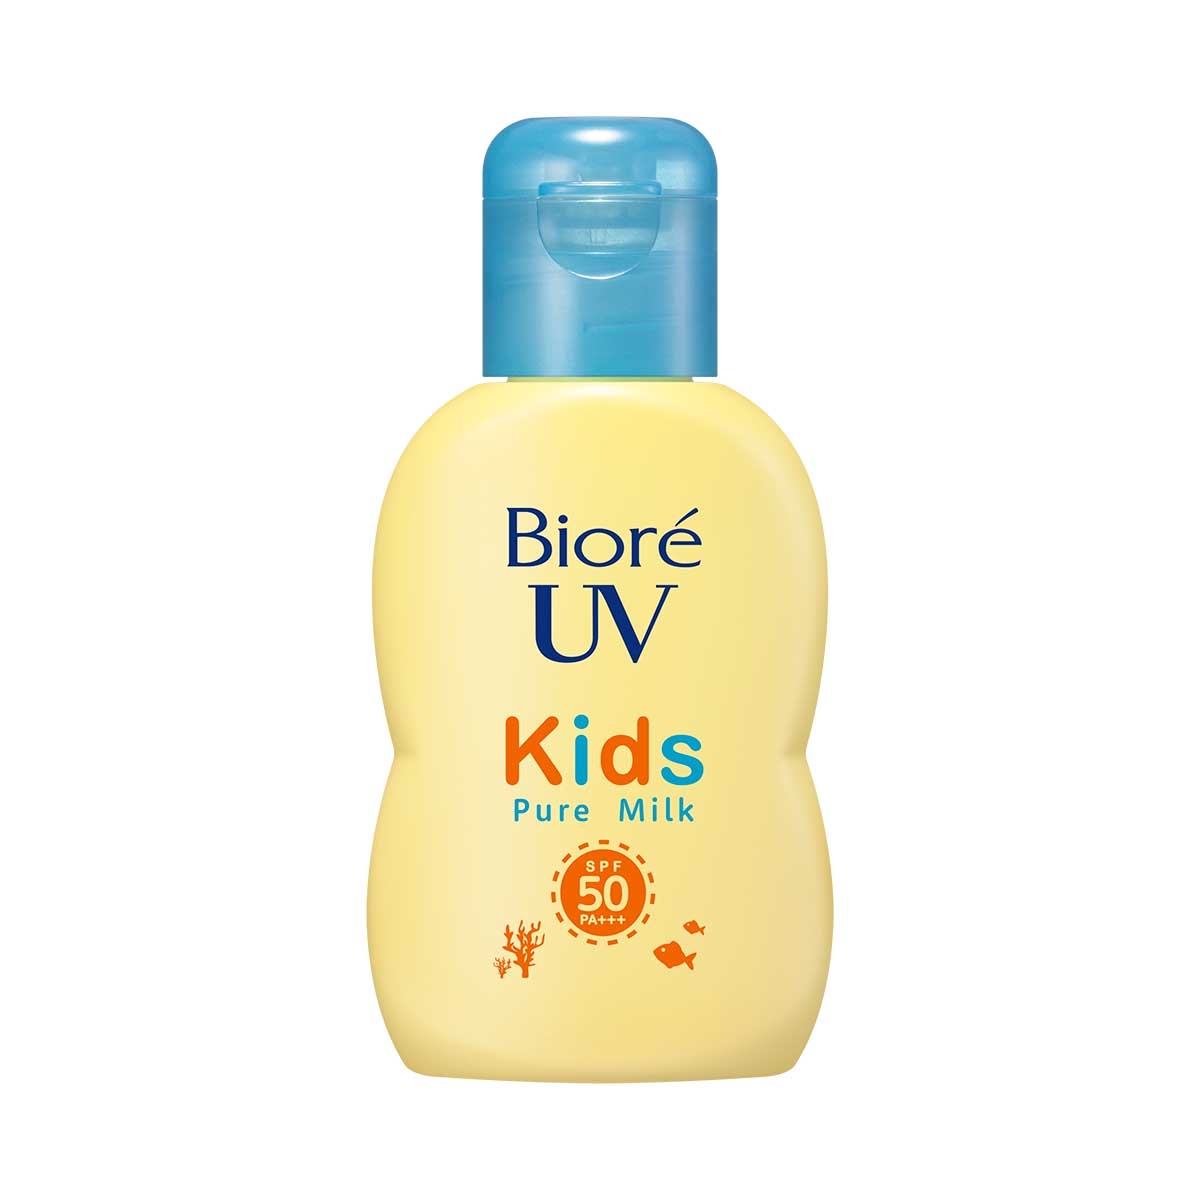 Protetor Solar Infantil Bioré UV Kids Pure Milk FPS 50 com 70ml 70ml